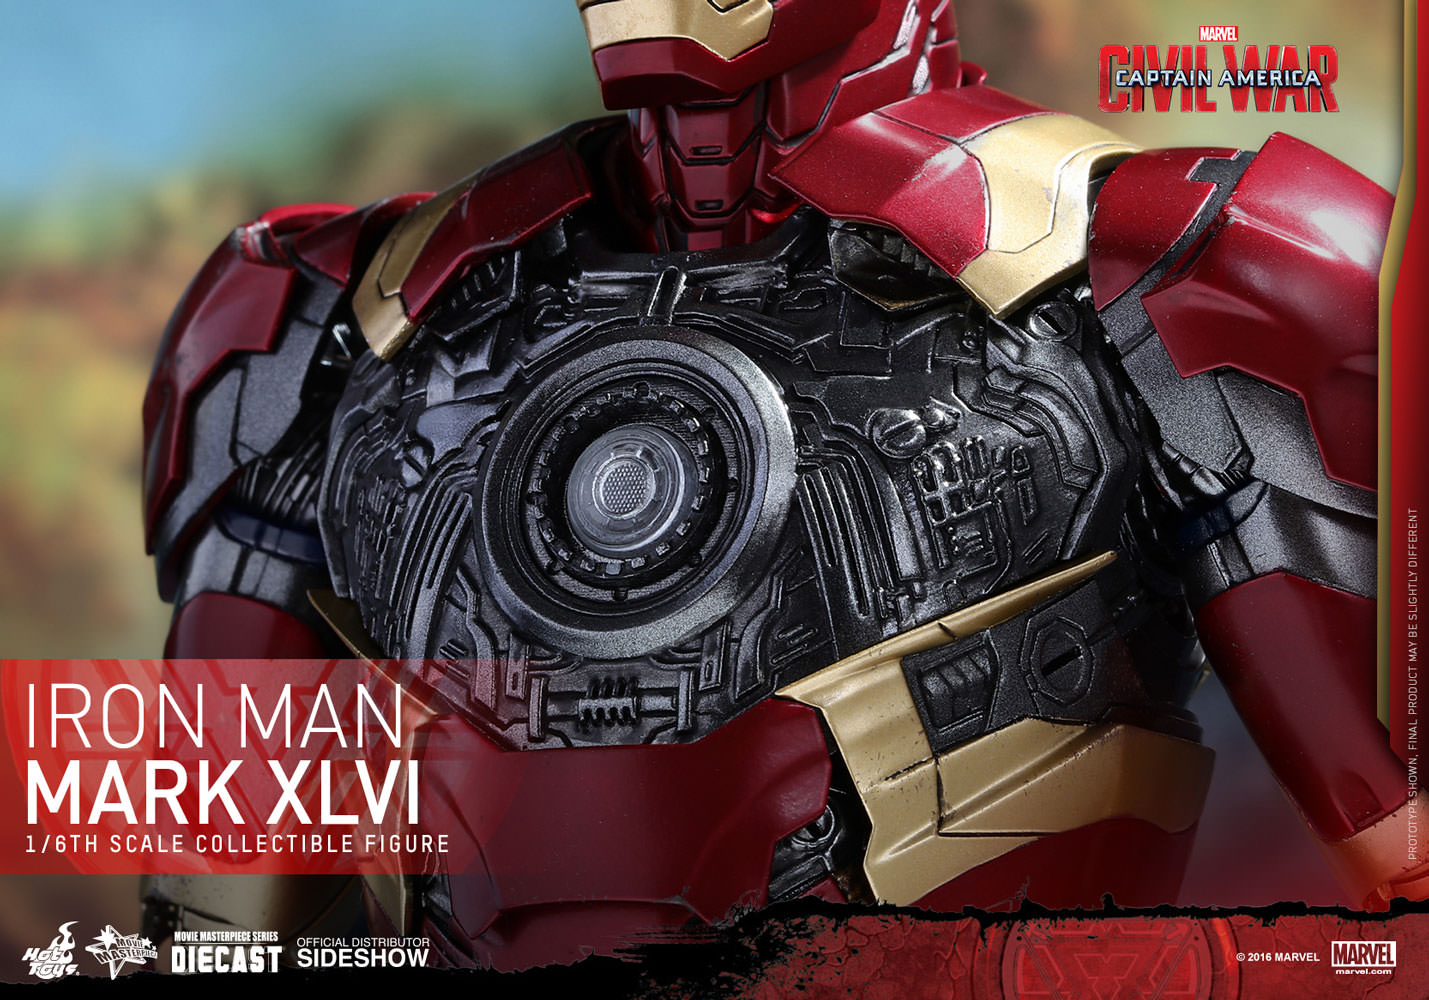 Iron Man Mark XLVI MK46 Sixth Scale Figure by Hot Toys